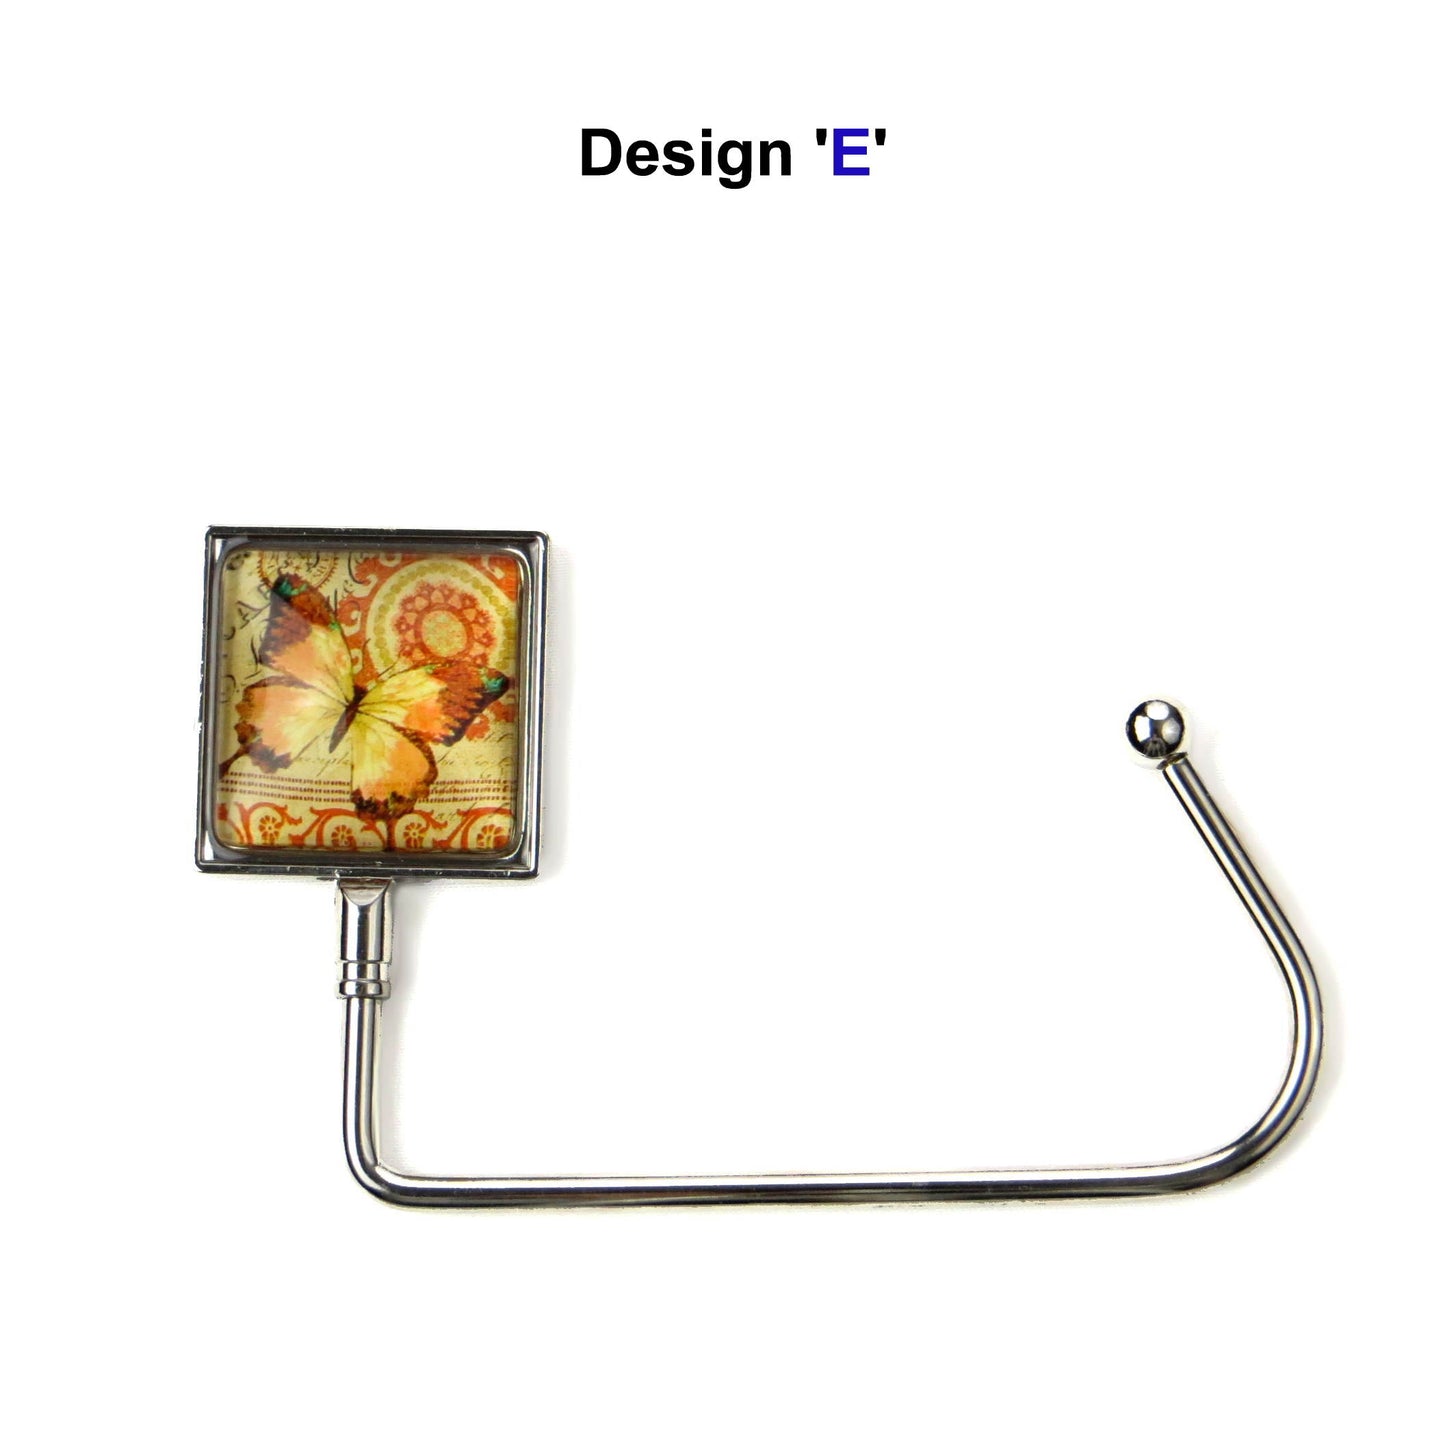 Handbag hook for hanging accessories on tables, ledges, and shelves